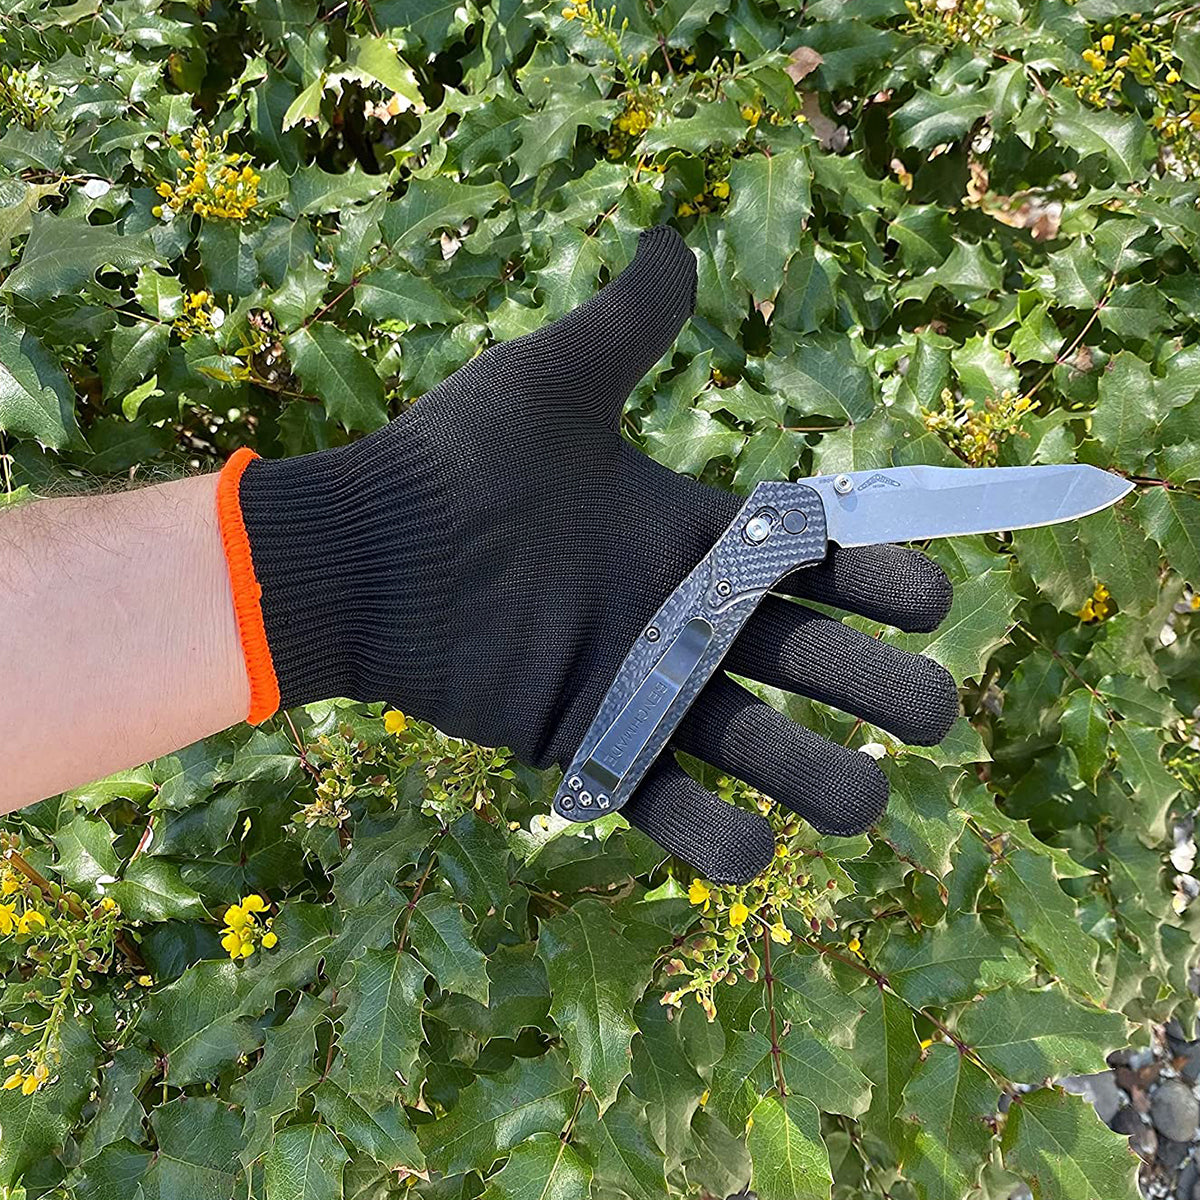 Glacier Glove Inner Poly Liner for Gloves - Black Glacier Glove